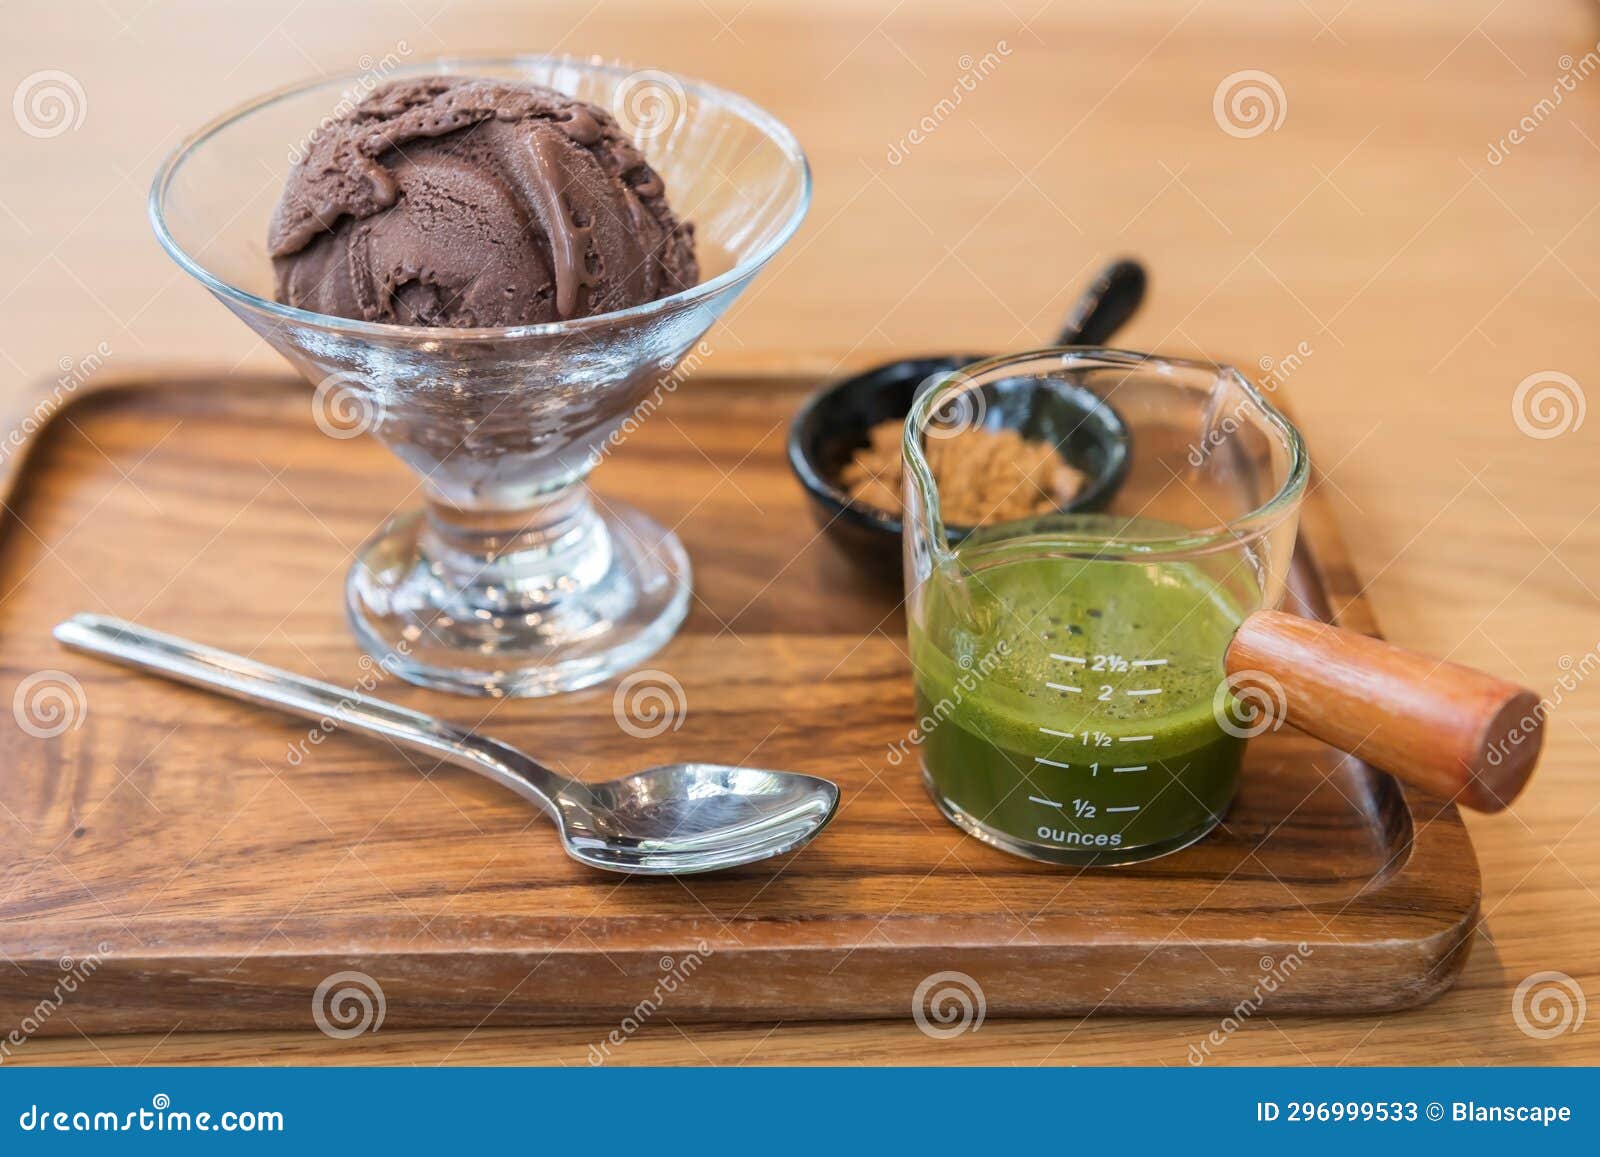 affogato chocolate ice cream with green tea hot fudge on wood table